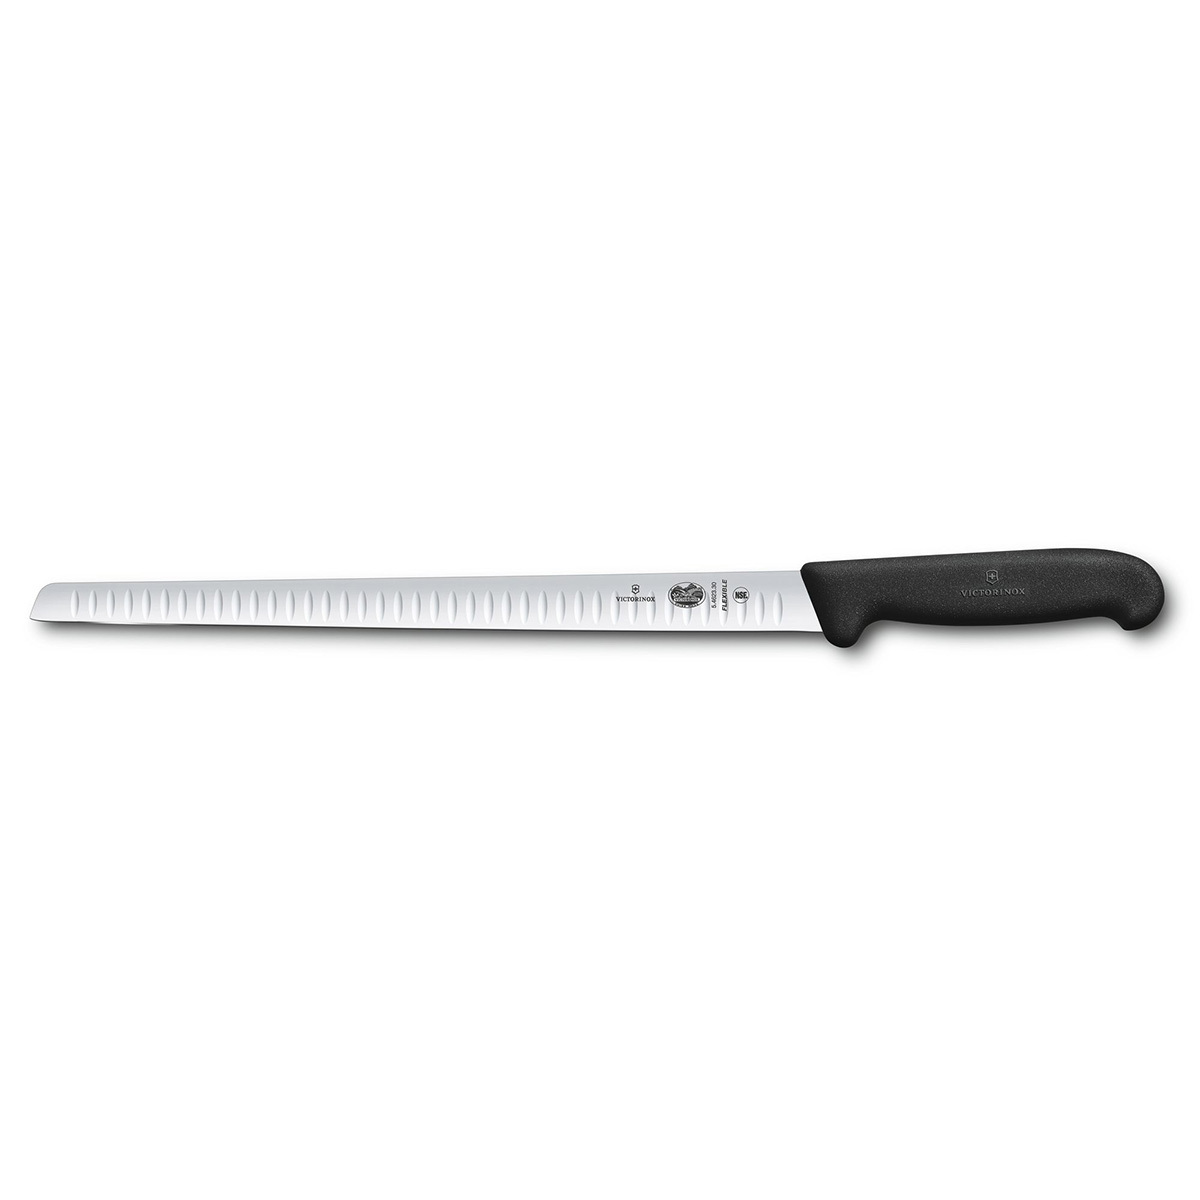 Кухонный нож рыбы Victorinox 5.4623.30 кухонный нож для сыра и масла victorinox 6 7863 13